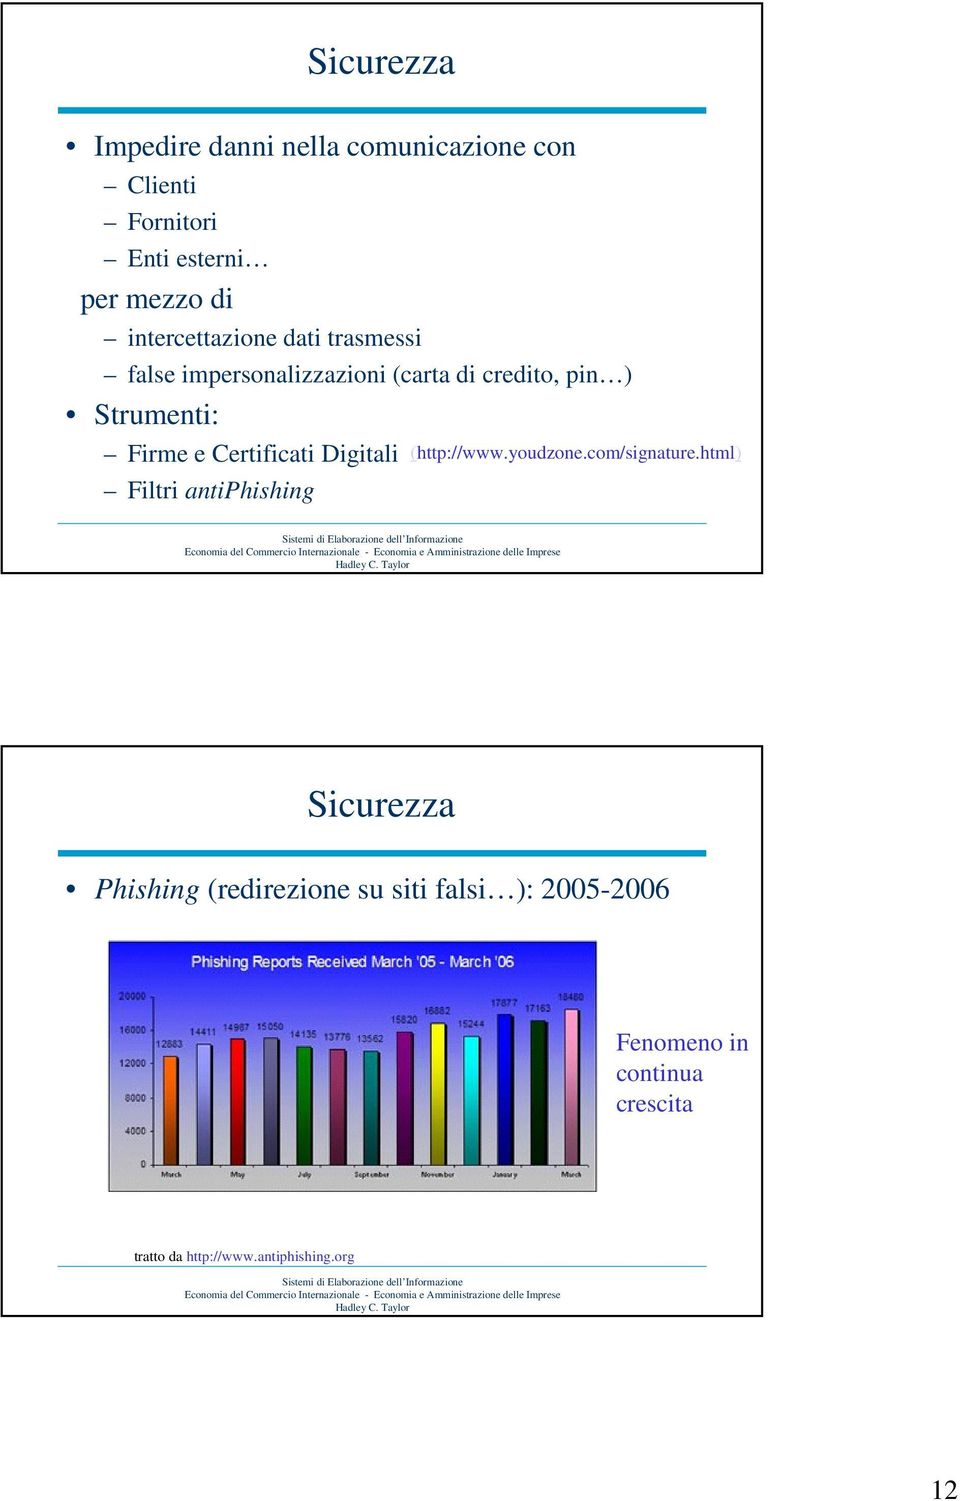 Certificati Digitali Filtri antiphishing (http://www.youdzone.com/signature.